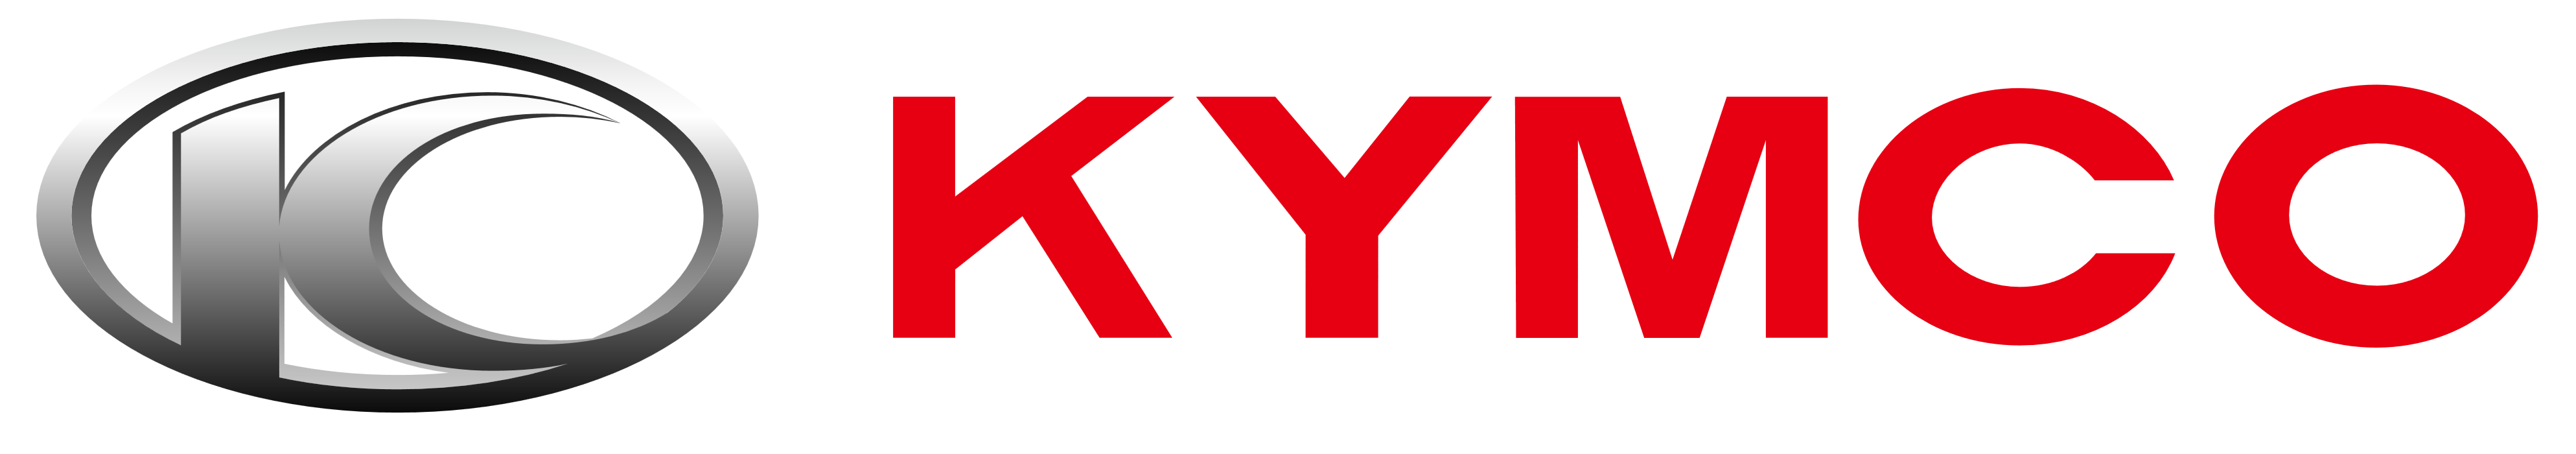 Kymco logo, logotype